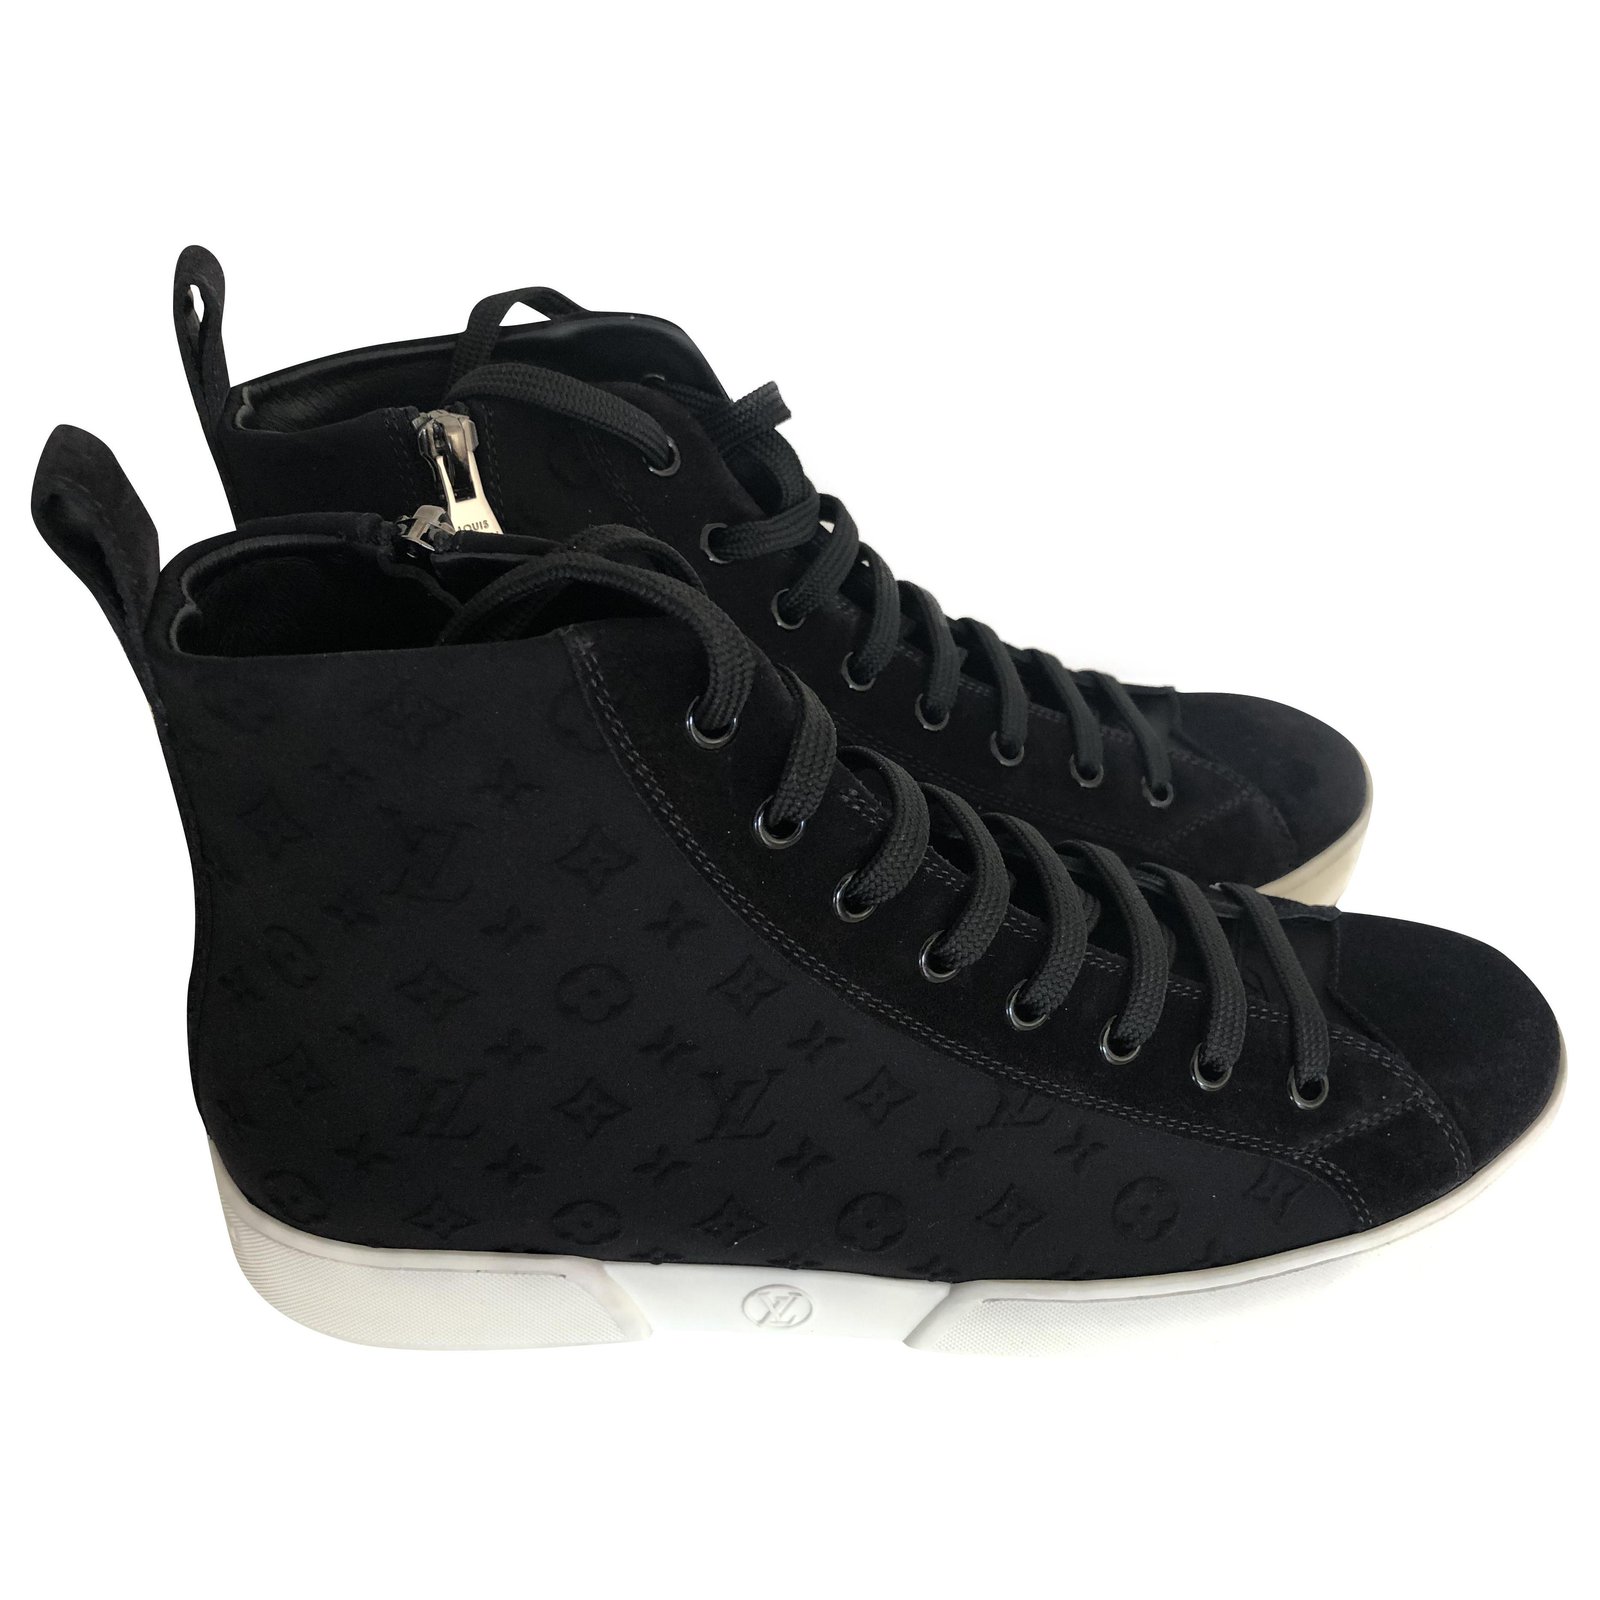 Louis Vuitton Stellar Sneaker in Black